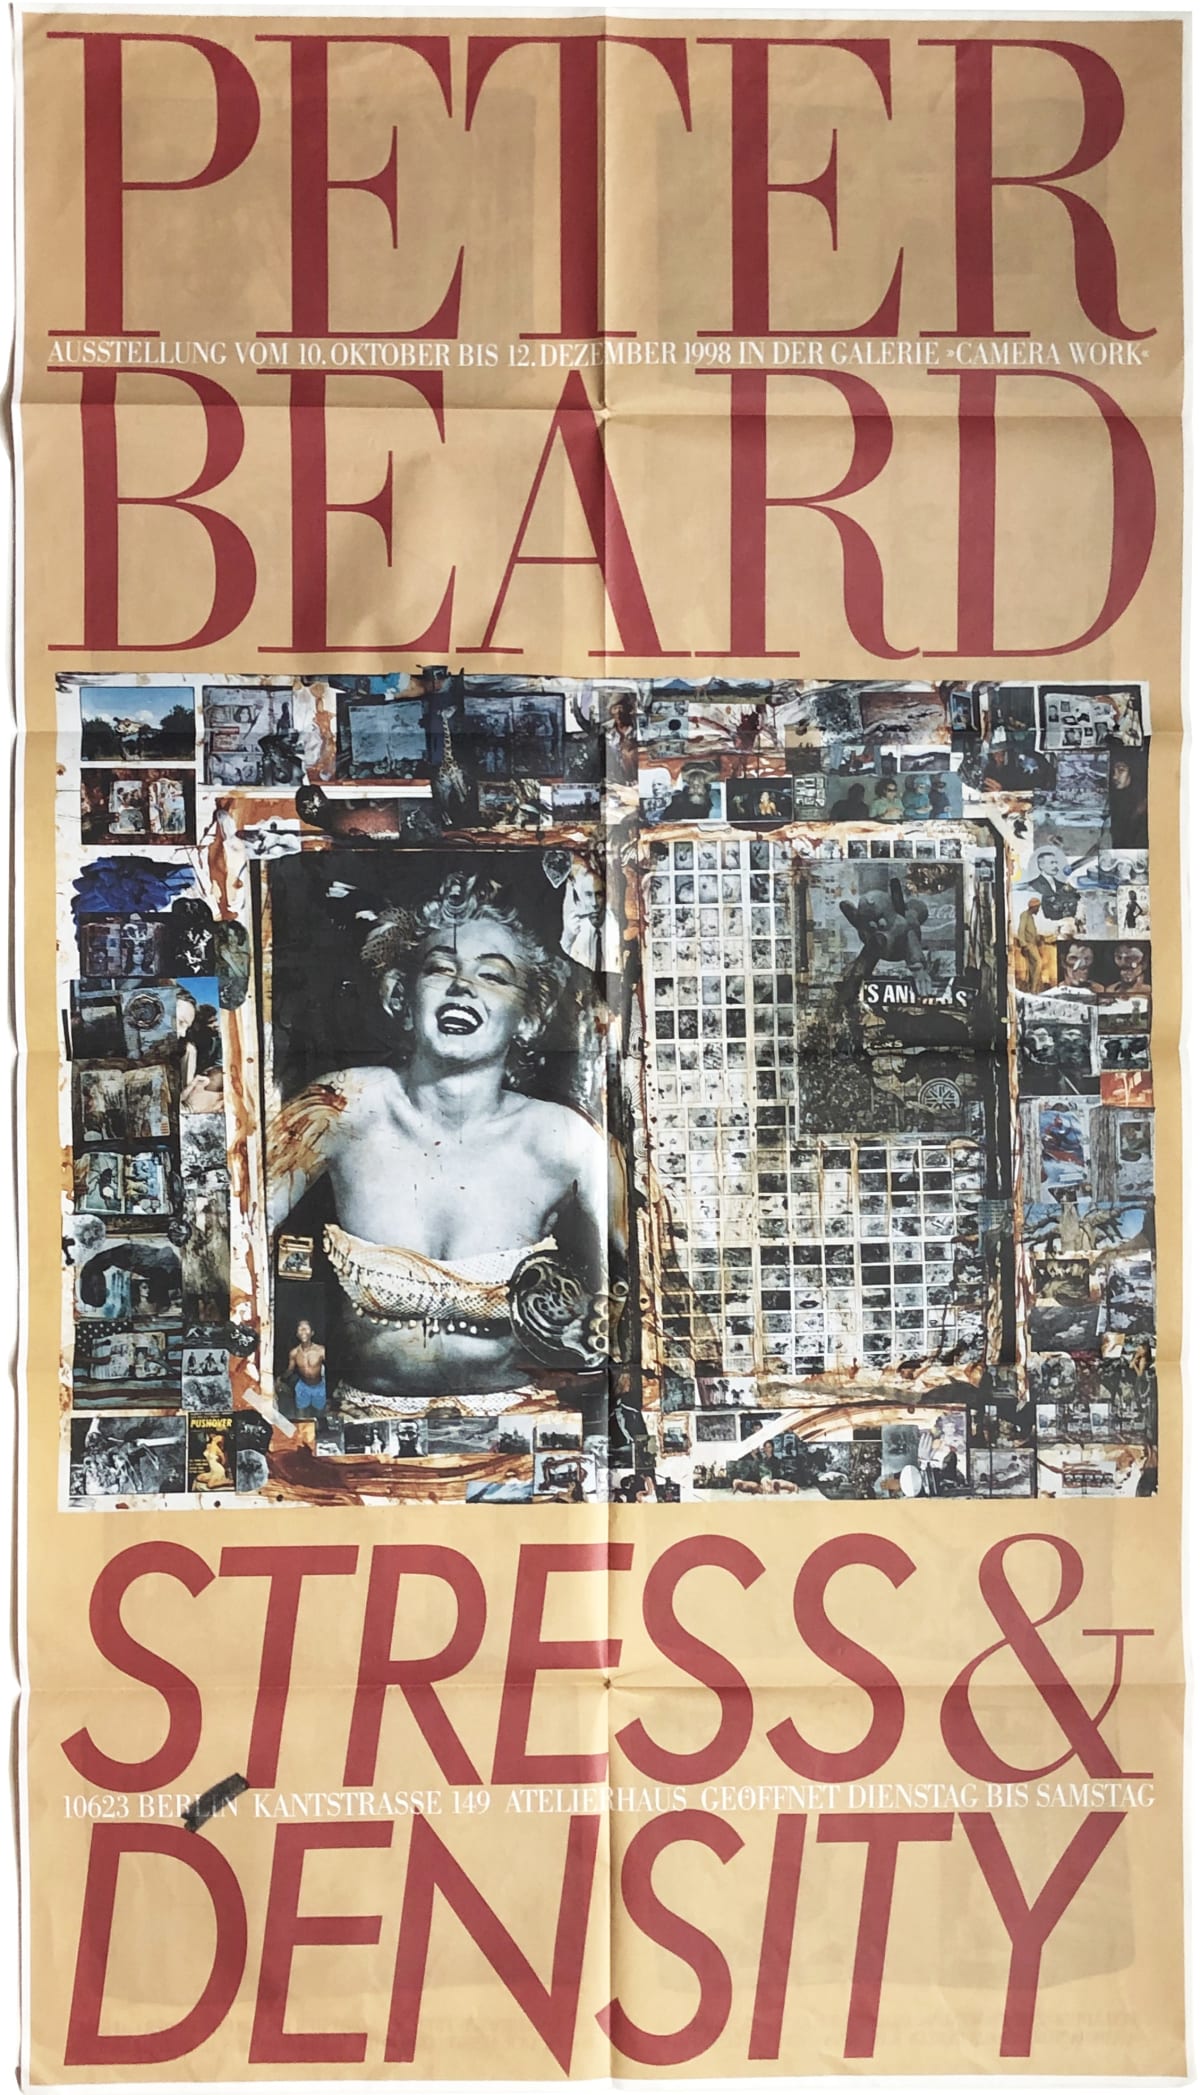 Peter Beard "Stress & Density" Exhibition Poster